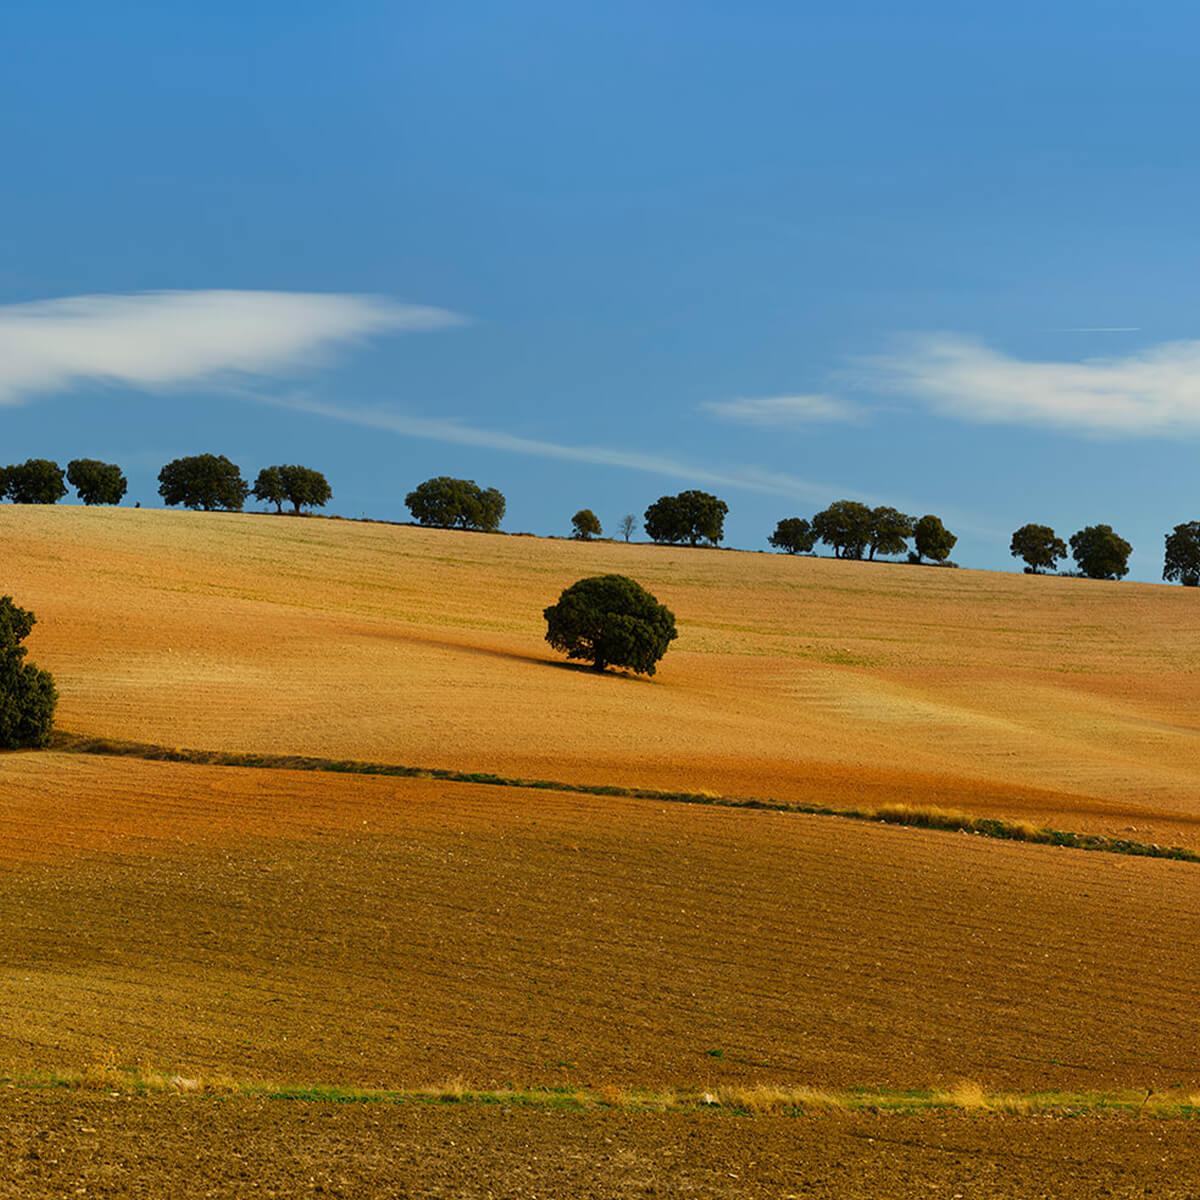 Trees in Spanish landscape